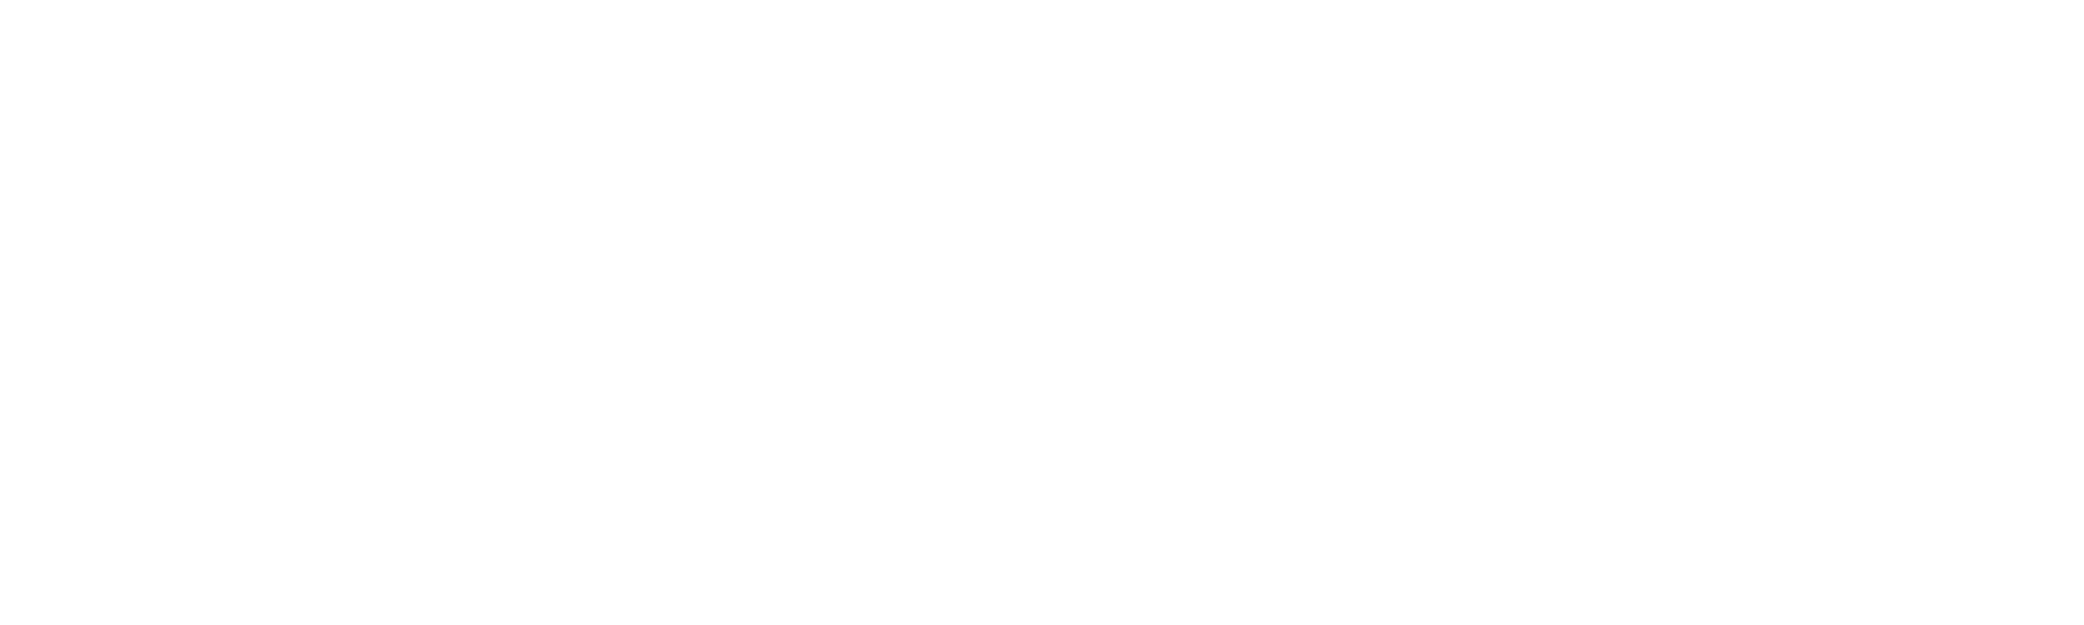 FedImpact Retirement Training by ProFeds